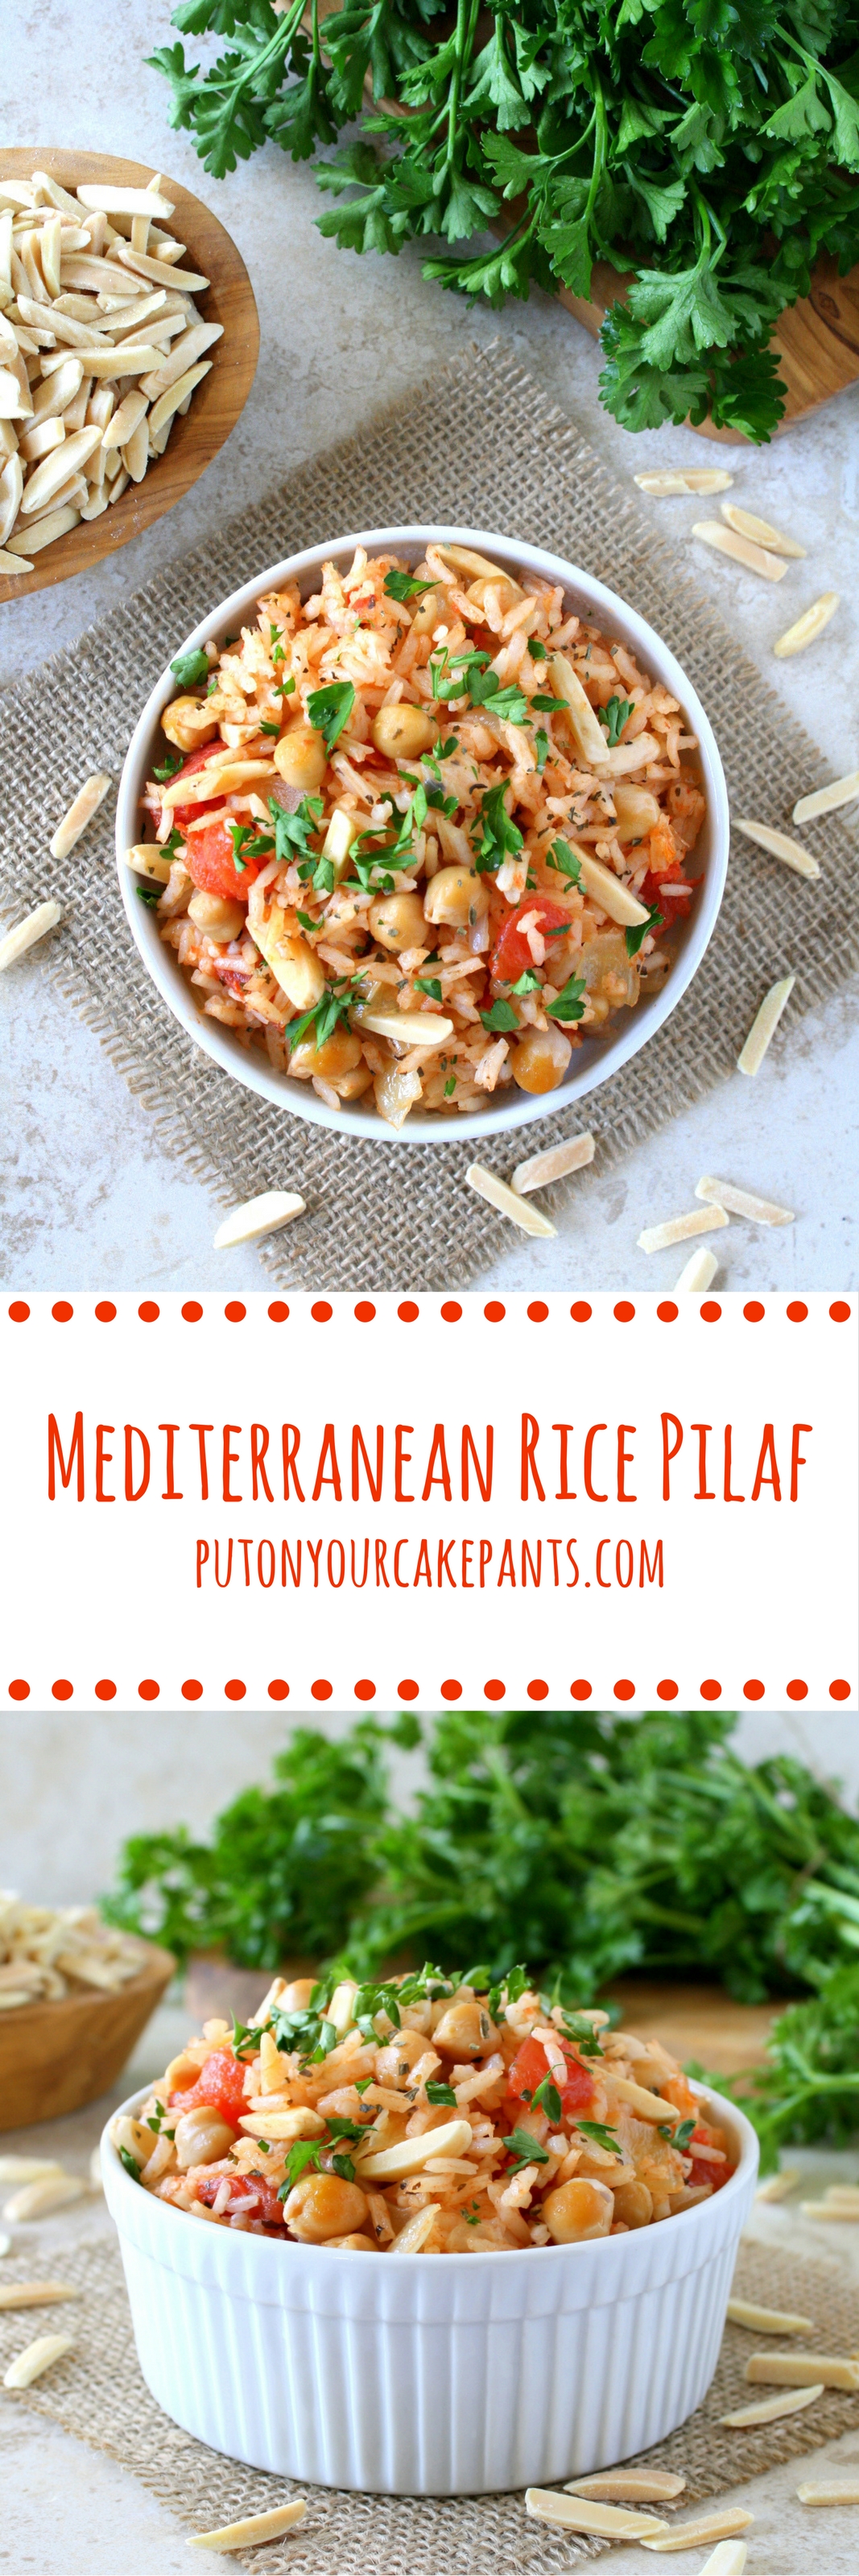 Mediterranean rice pilaf